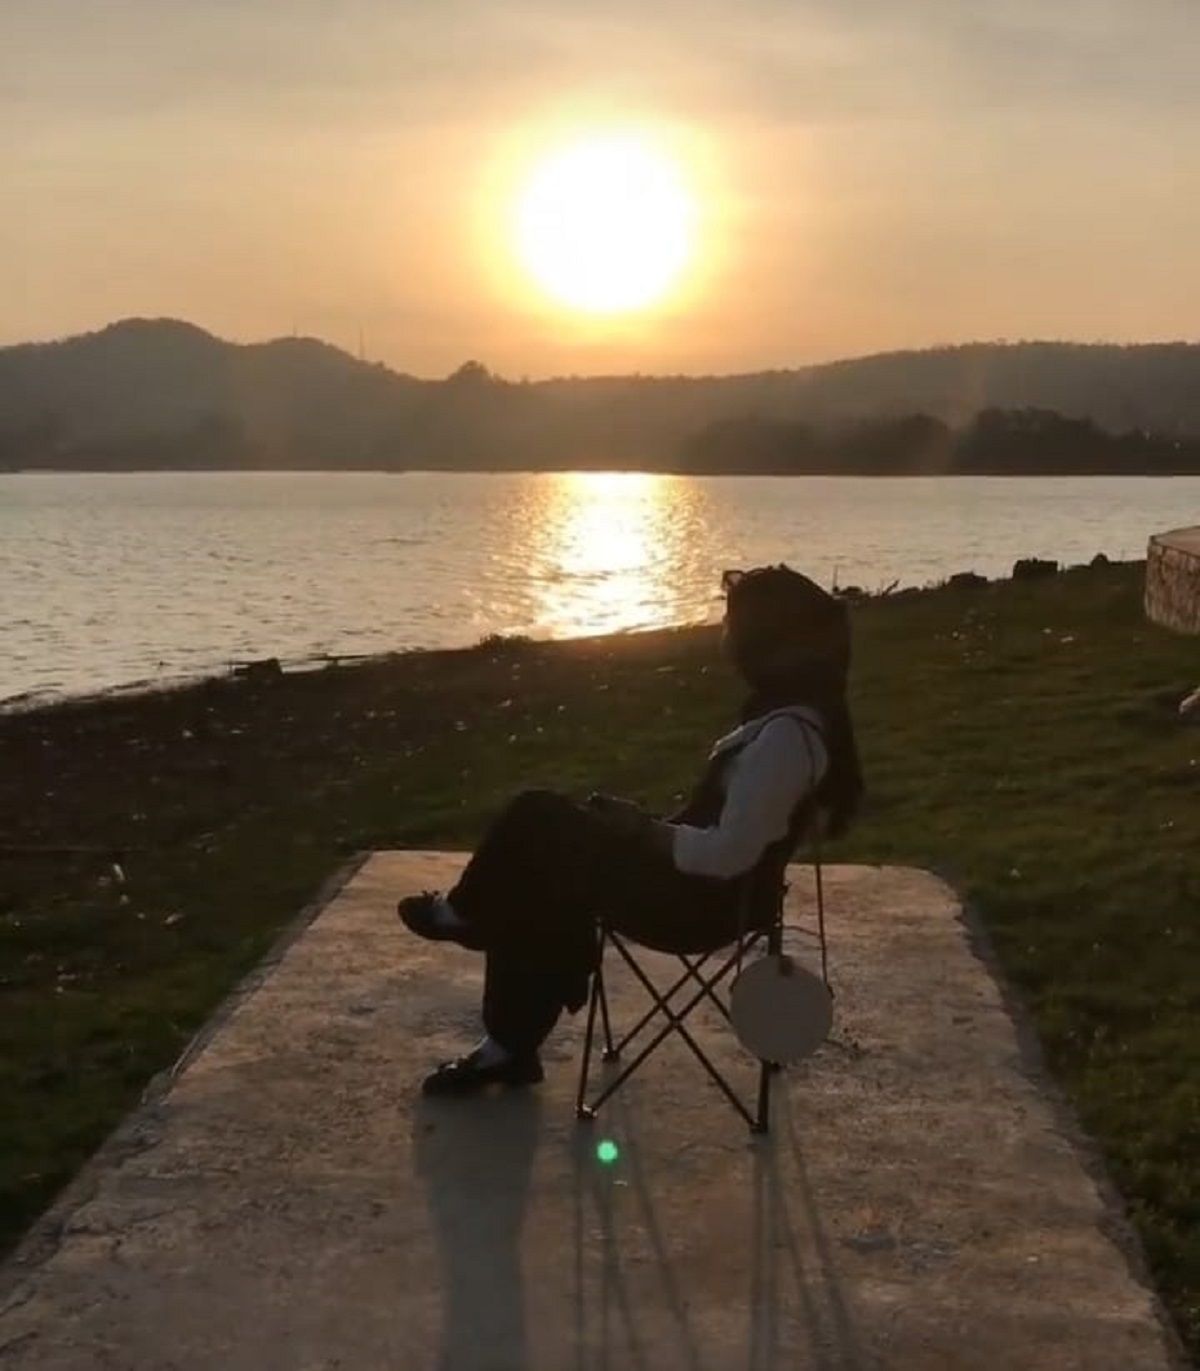 Seorang pengunjung sedang menikmati suasana matahari terbenam di Waduk Darma Kuningan.*/Instagram /@kuningan_eksiss